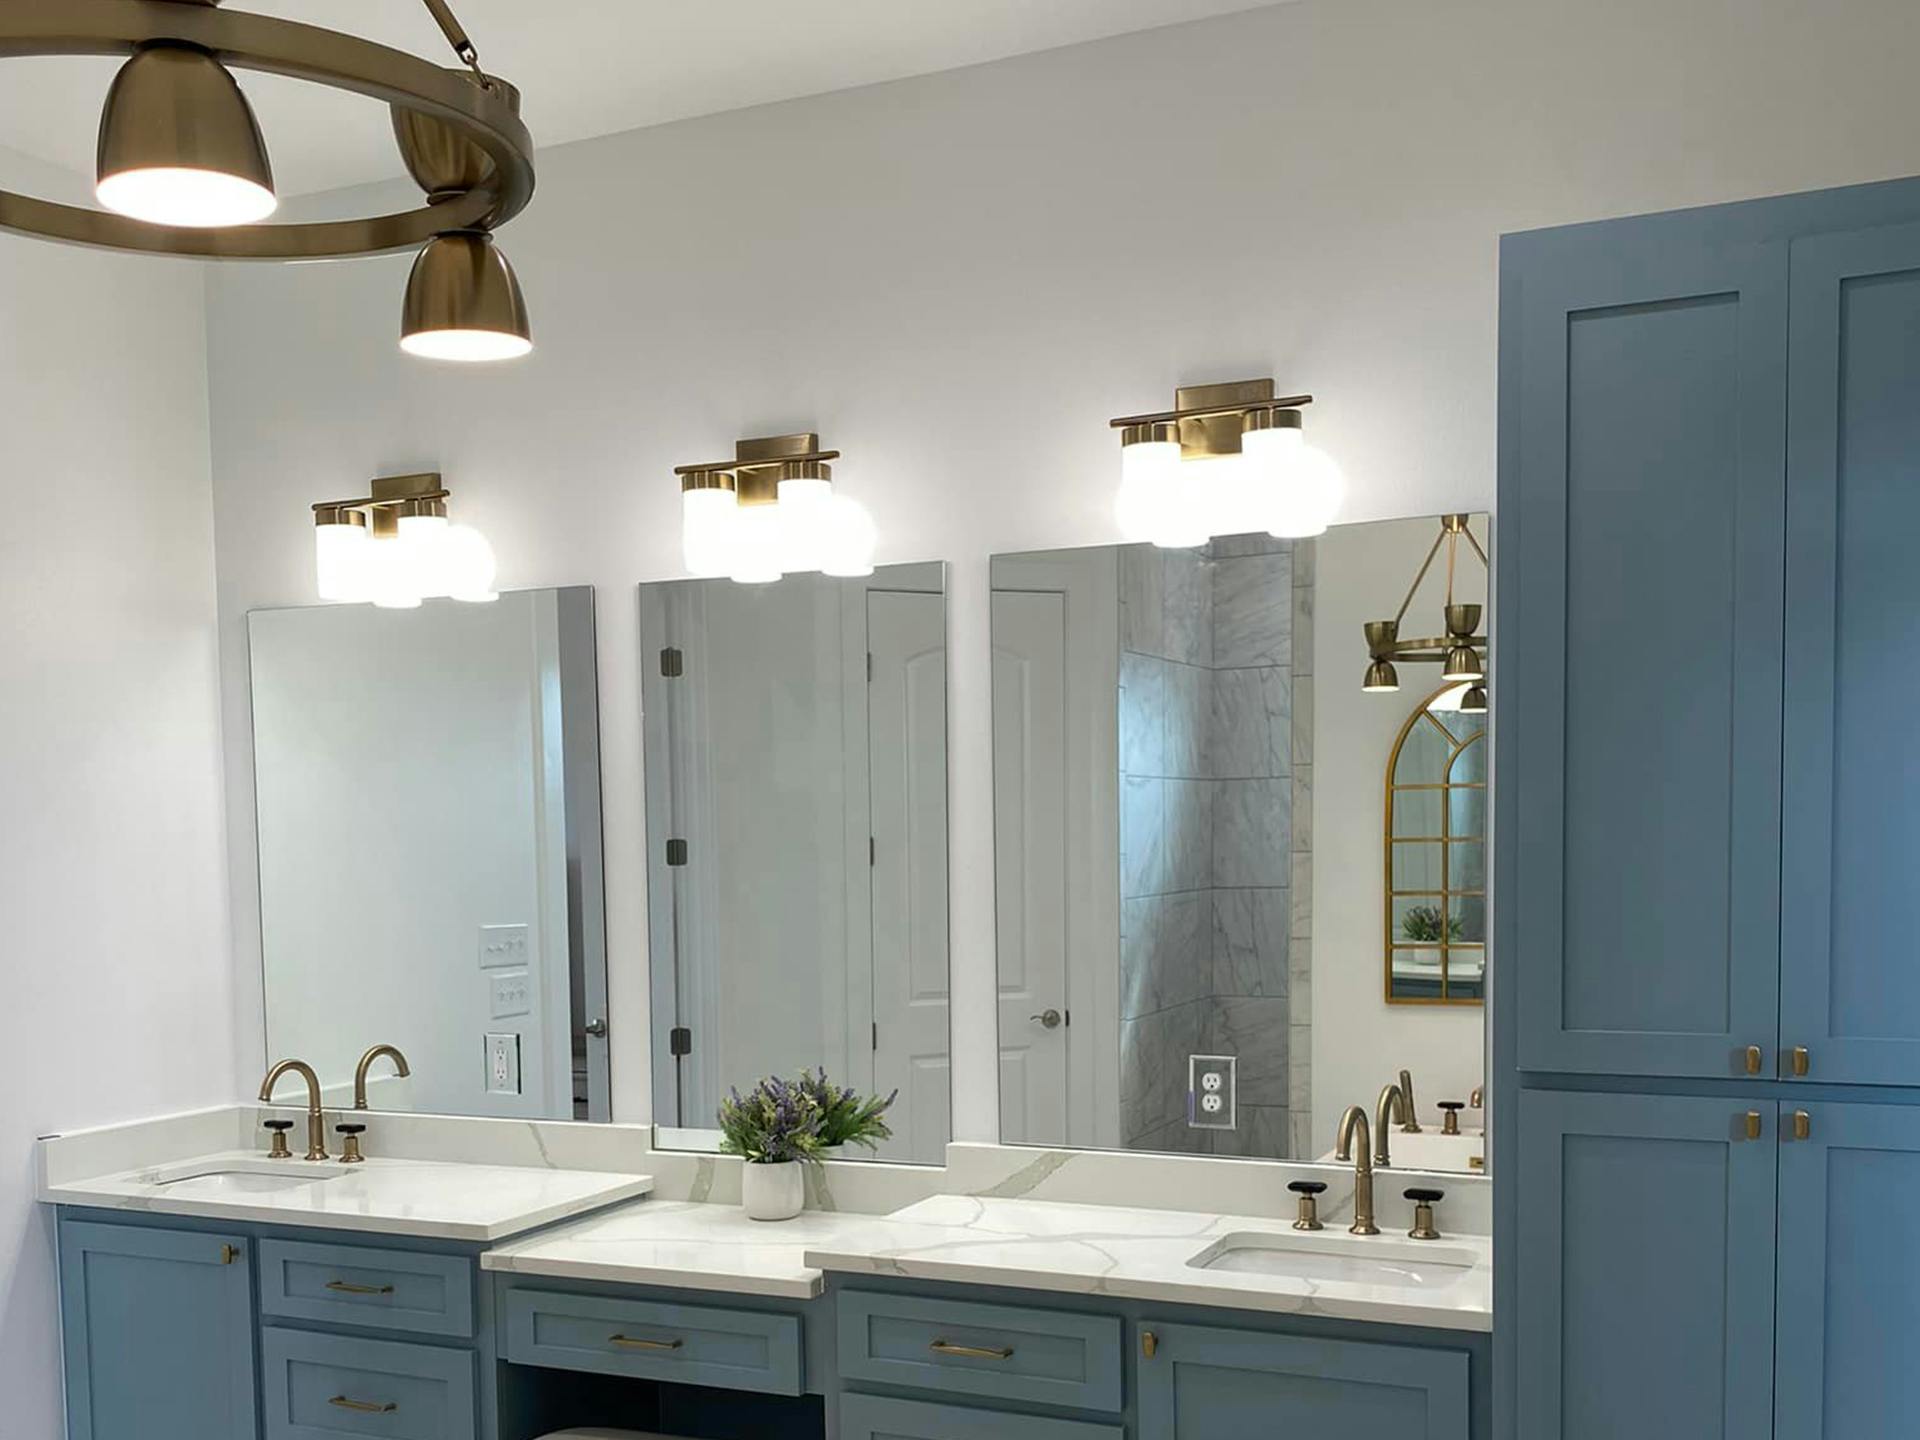 Bathroom vanity with 2 sinks and 3 mirrors. Kichler vanity lights hanging overhead